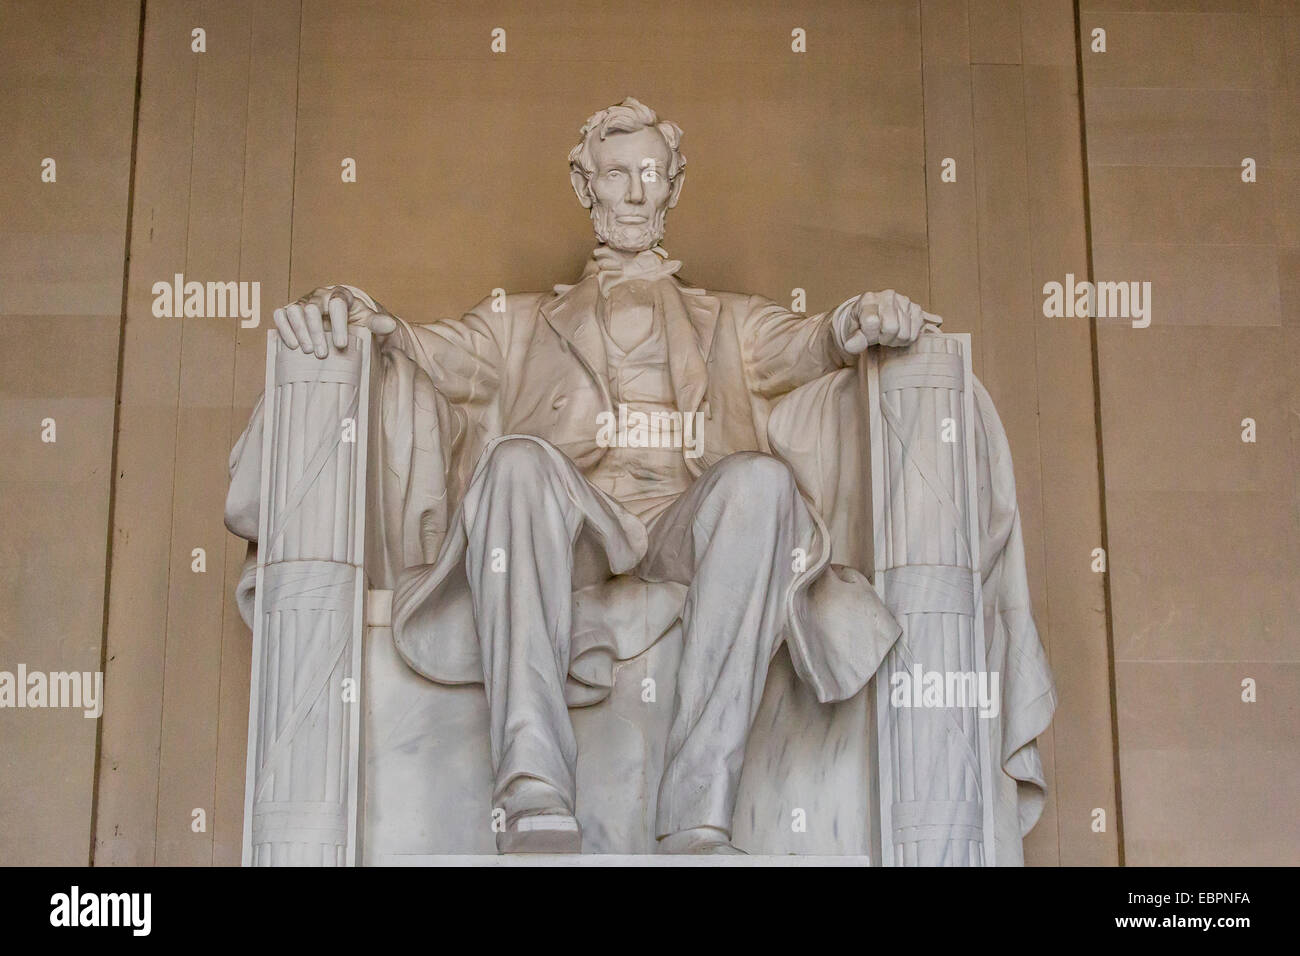 Interior view of the Lincoln statue in the Lincoln Memorial, Washington D.C., United States of America, North America Stock Photo